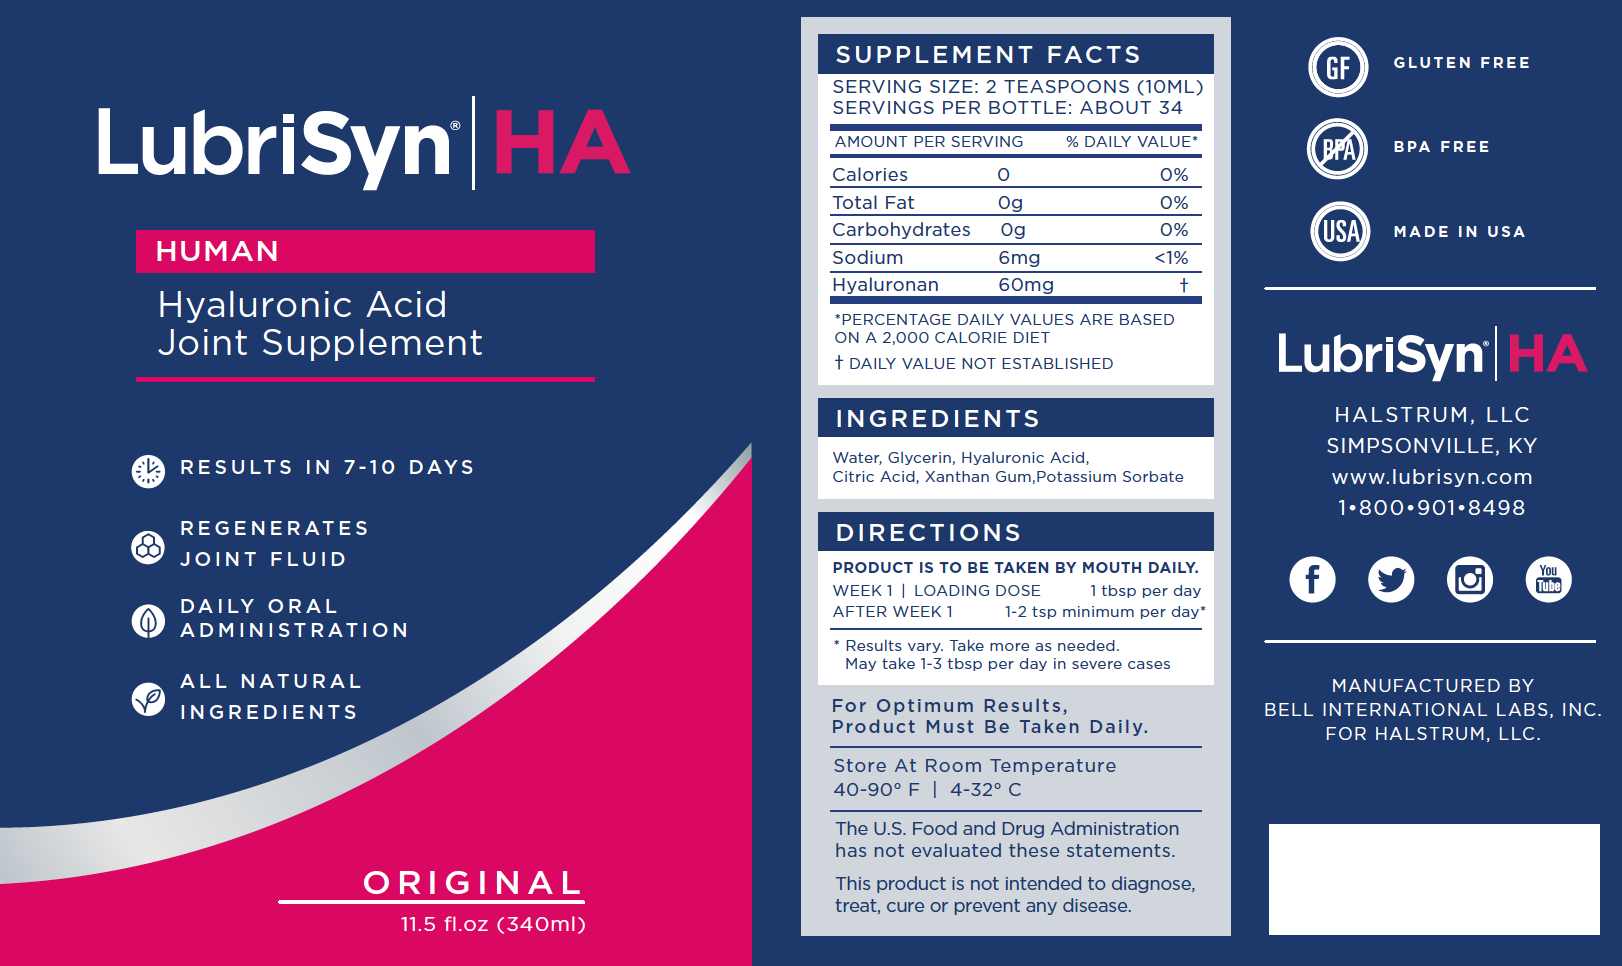 LubriSyn HA human original flavor label. Includes dosing information.